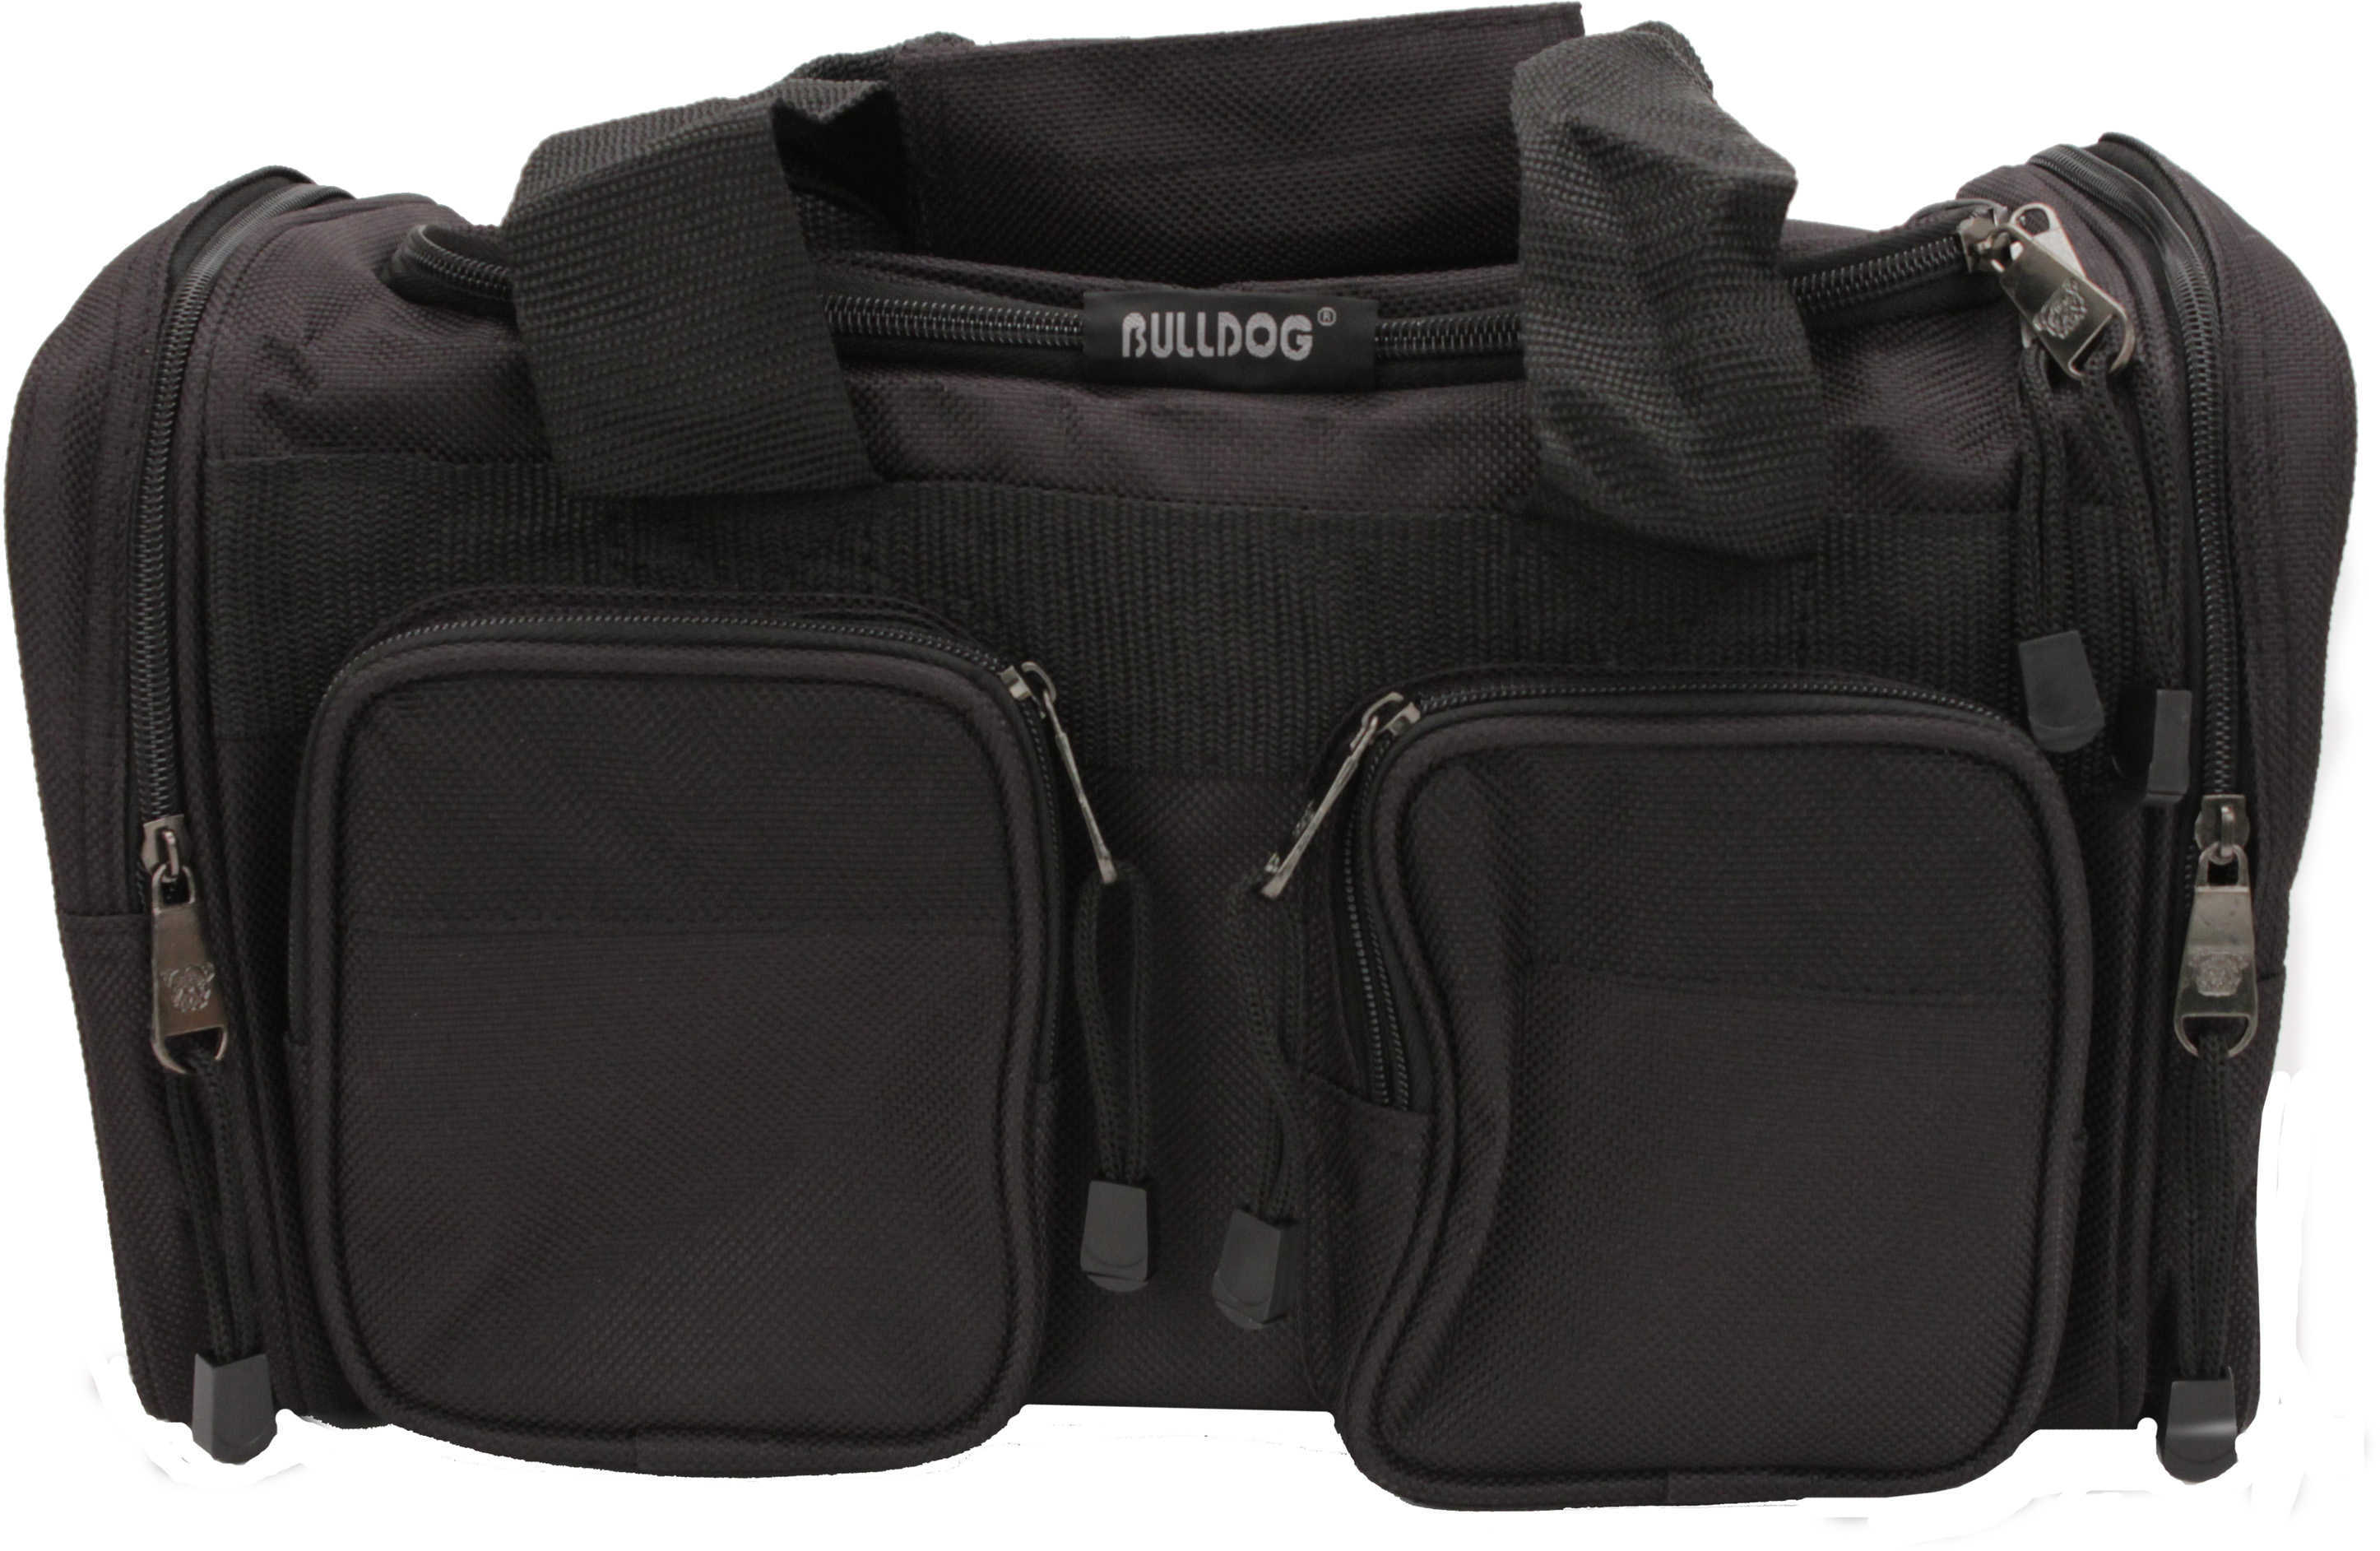 Bulldog Cases Range Bag Black Soft BD900